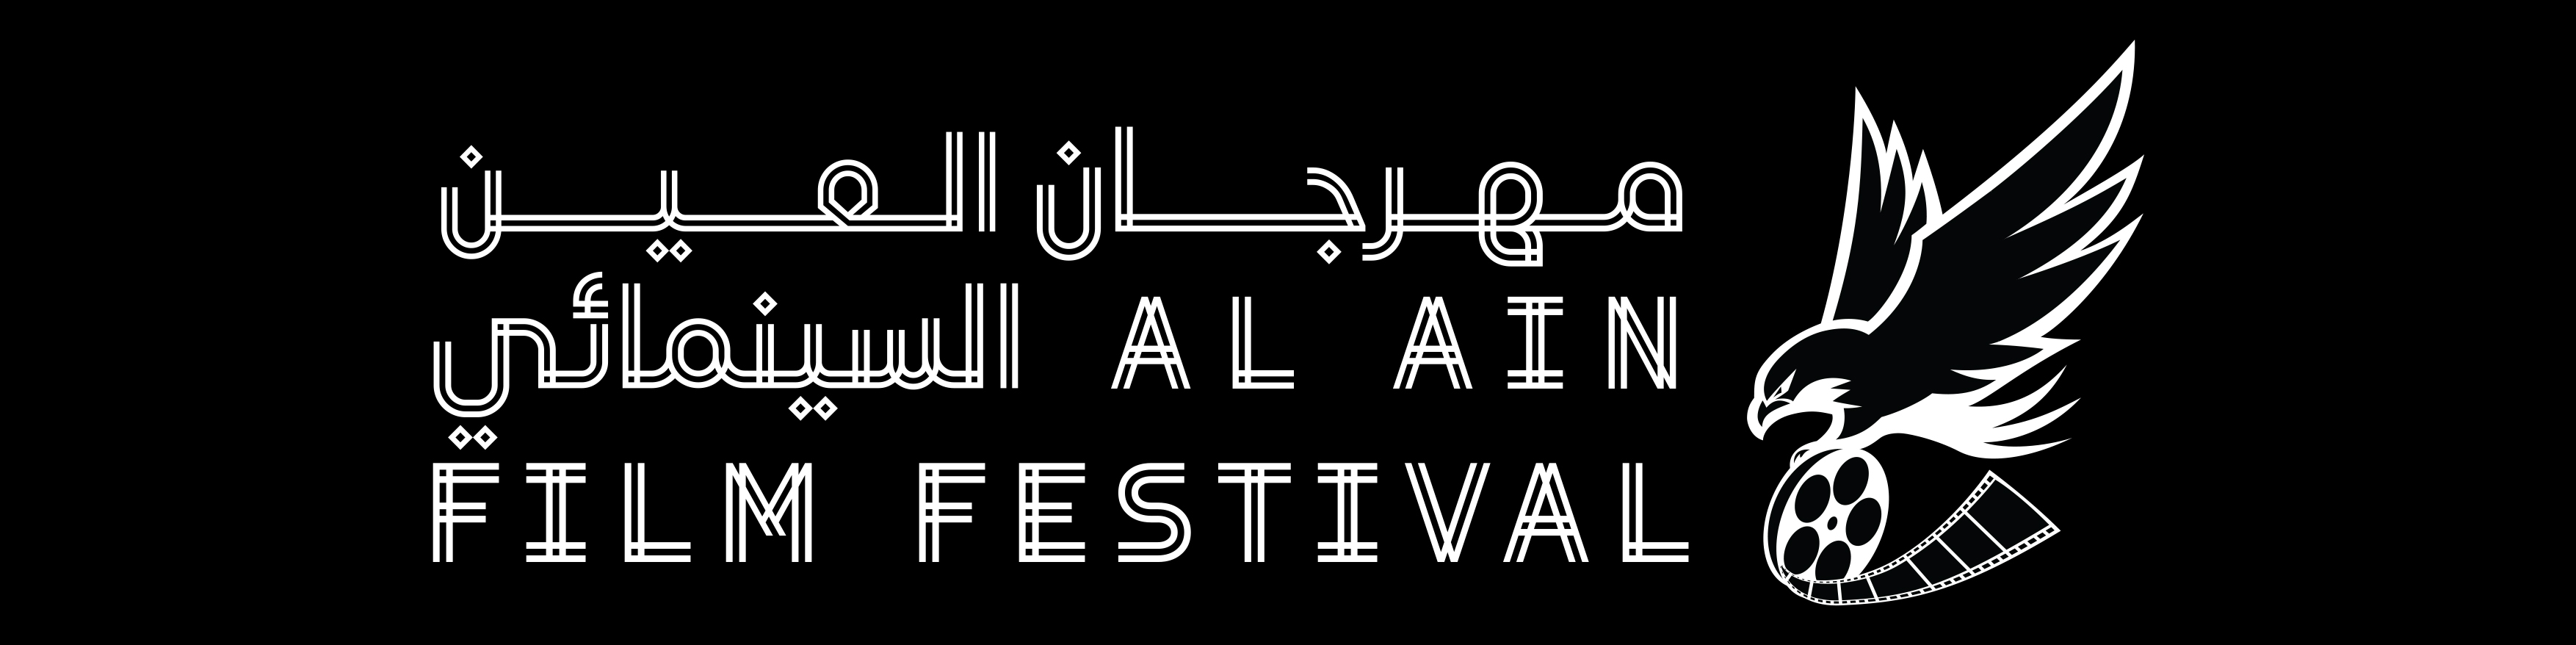 Al Ain Film Festival - on Black